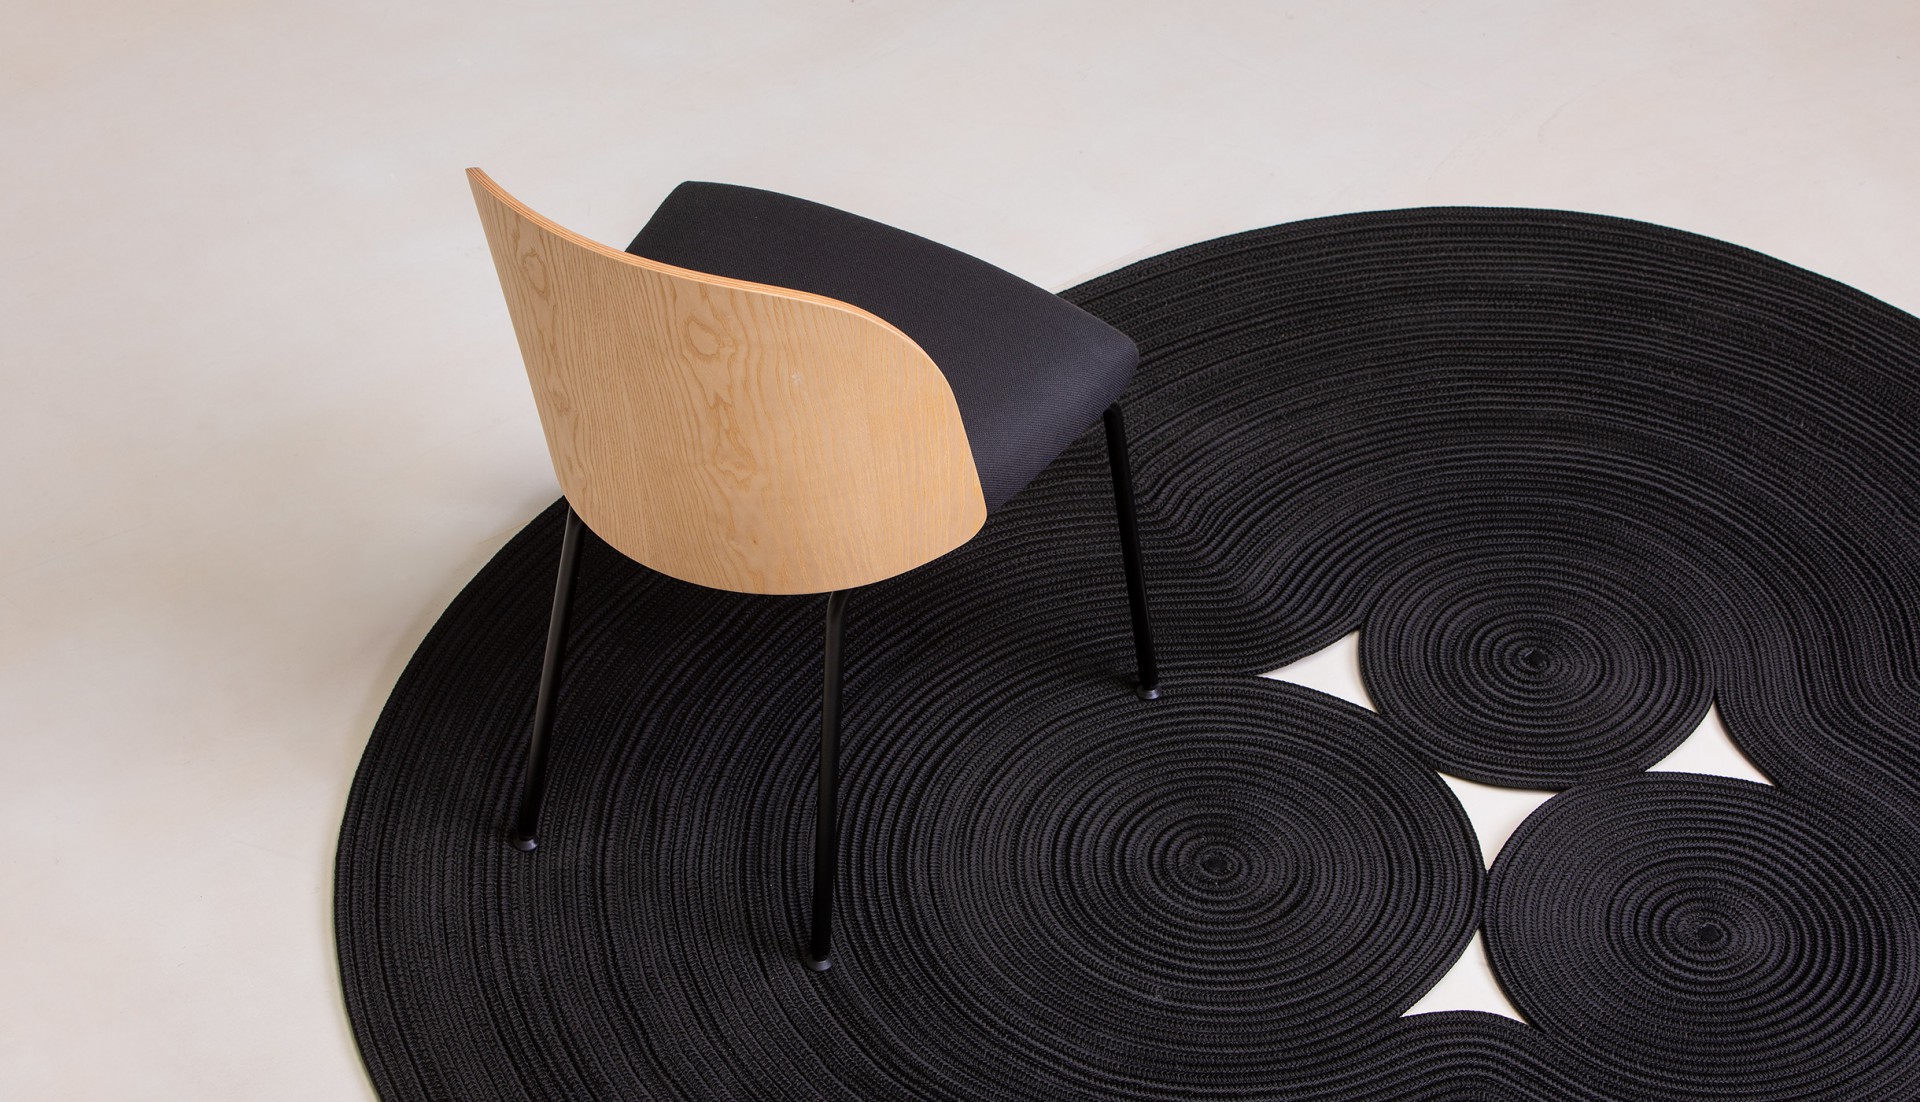 Cistell Slim chair with wooden legs - Vergés